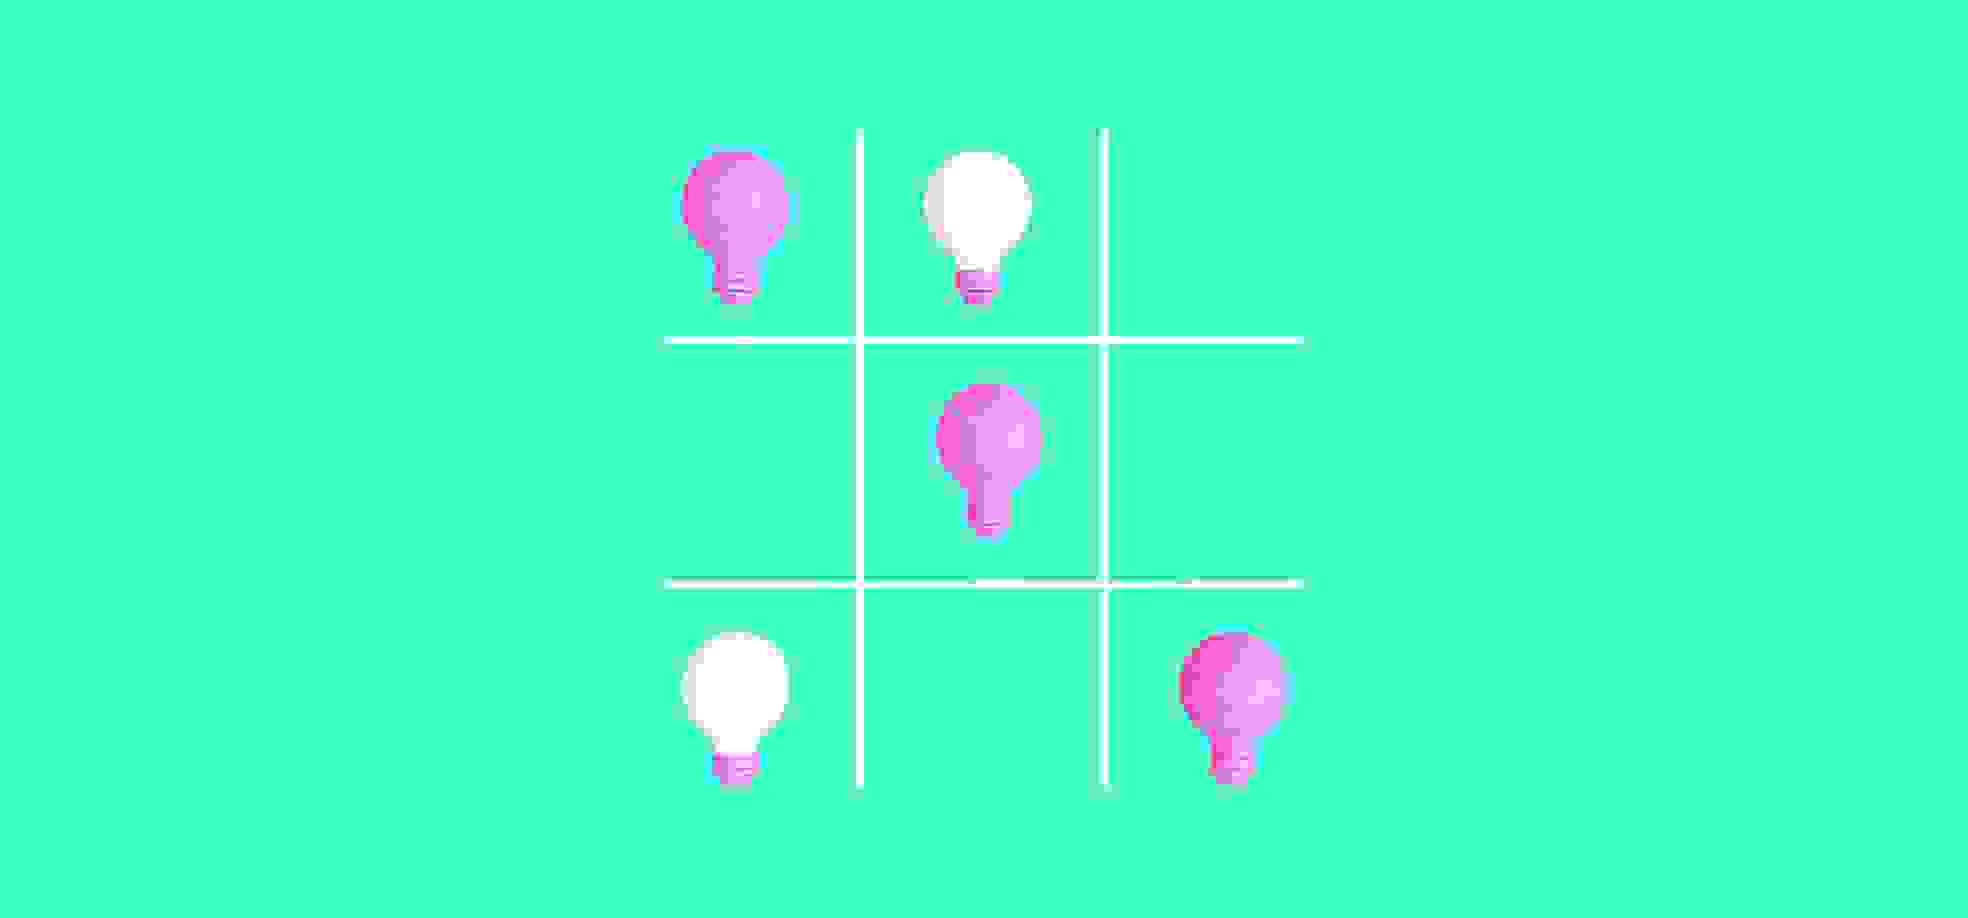 tik tak toe illustration with light bulbs on a green background